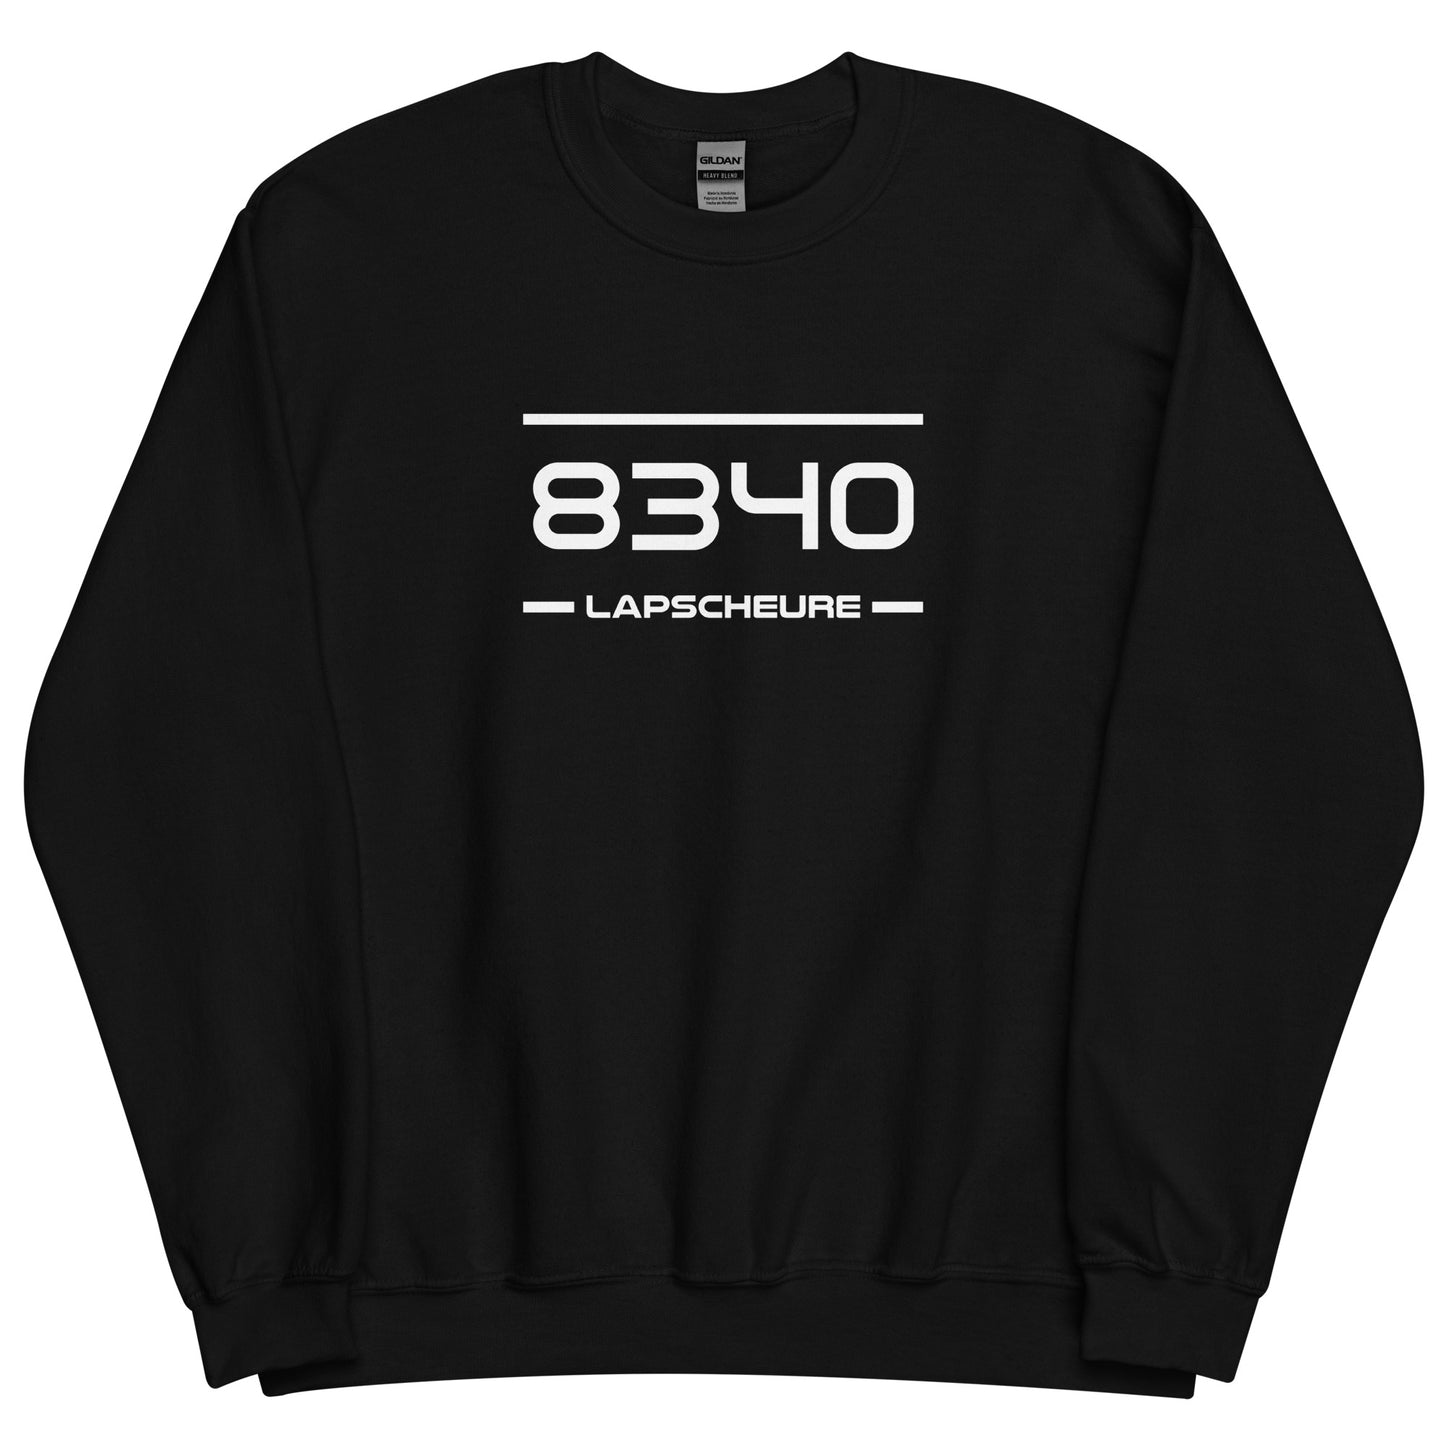 Sweater - 8340 - Lapscheure (M/V)